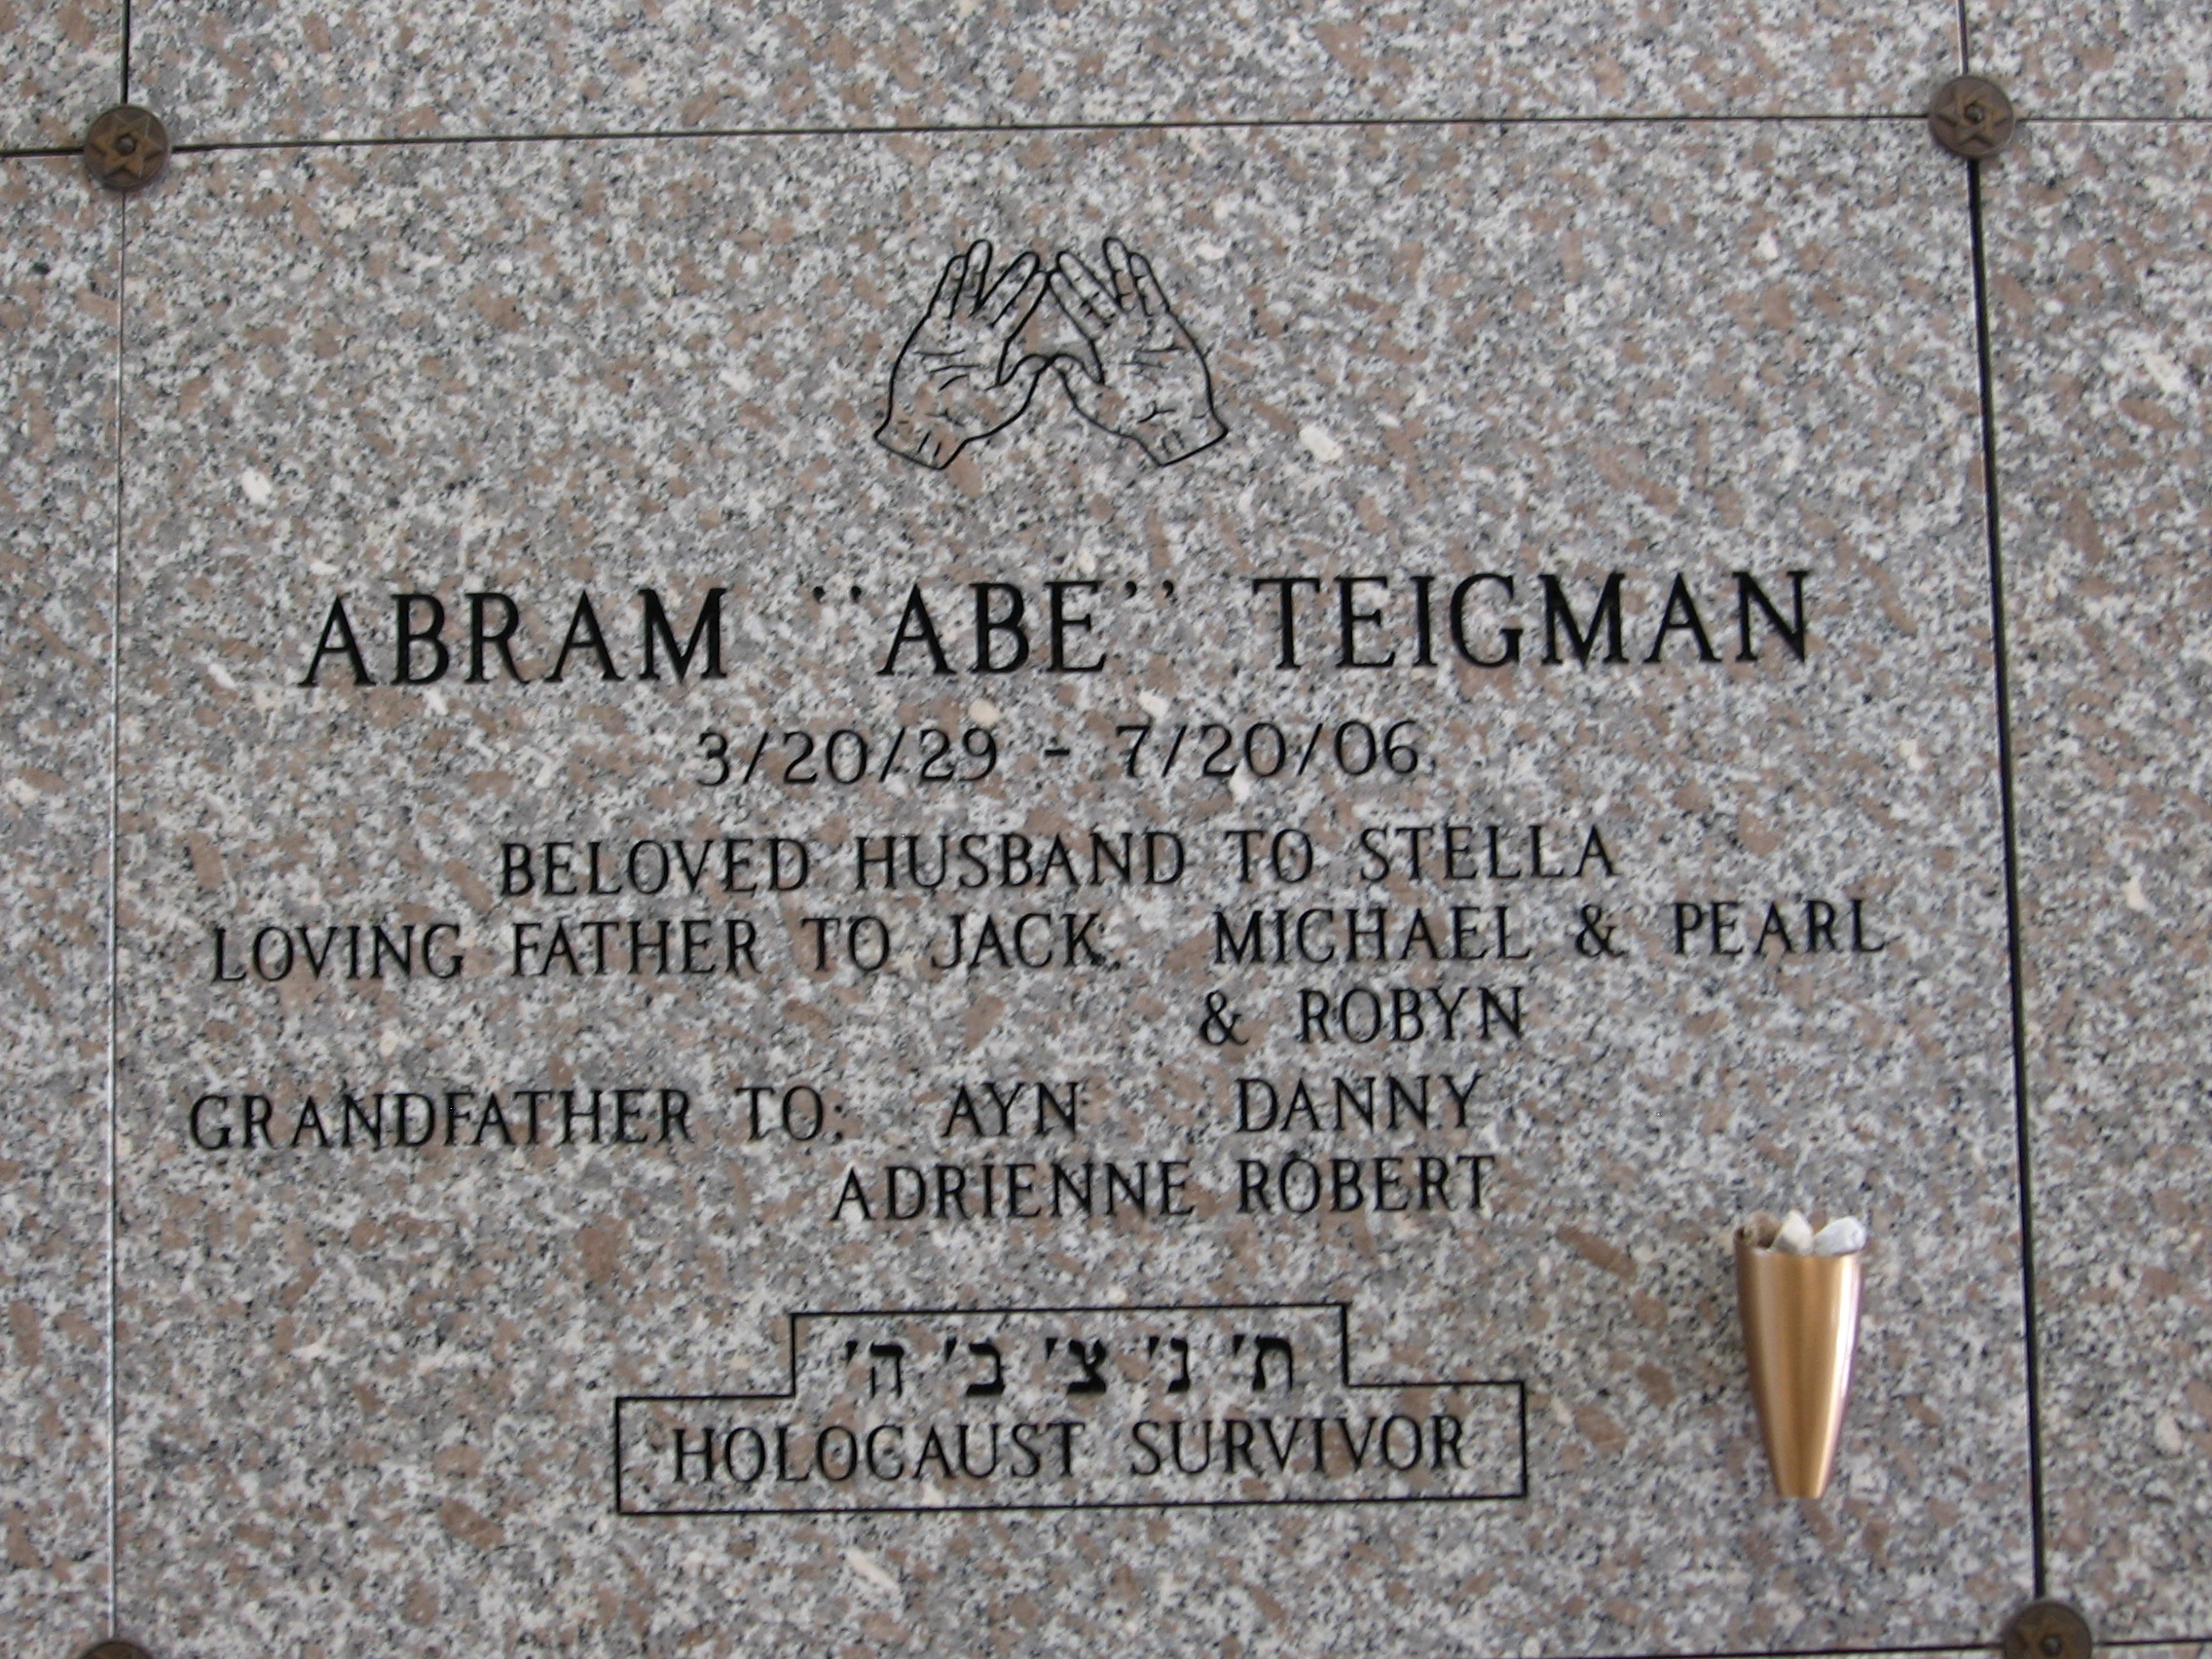 Abram "Abe" Teigman